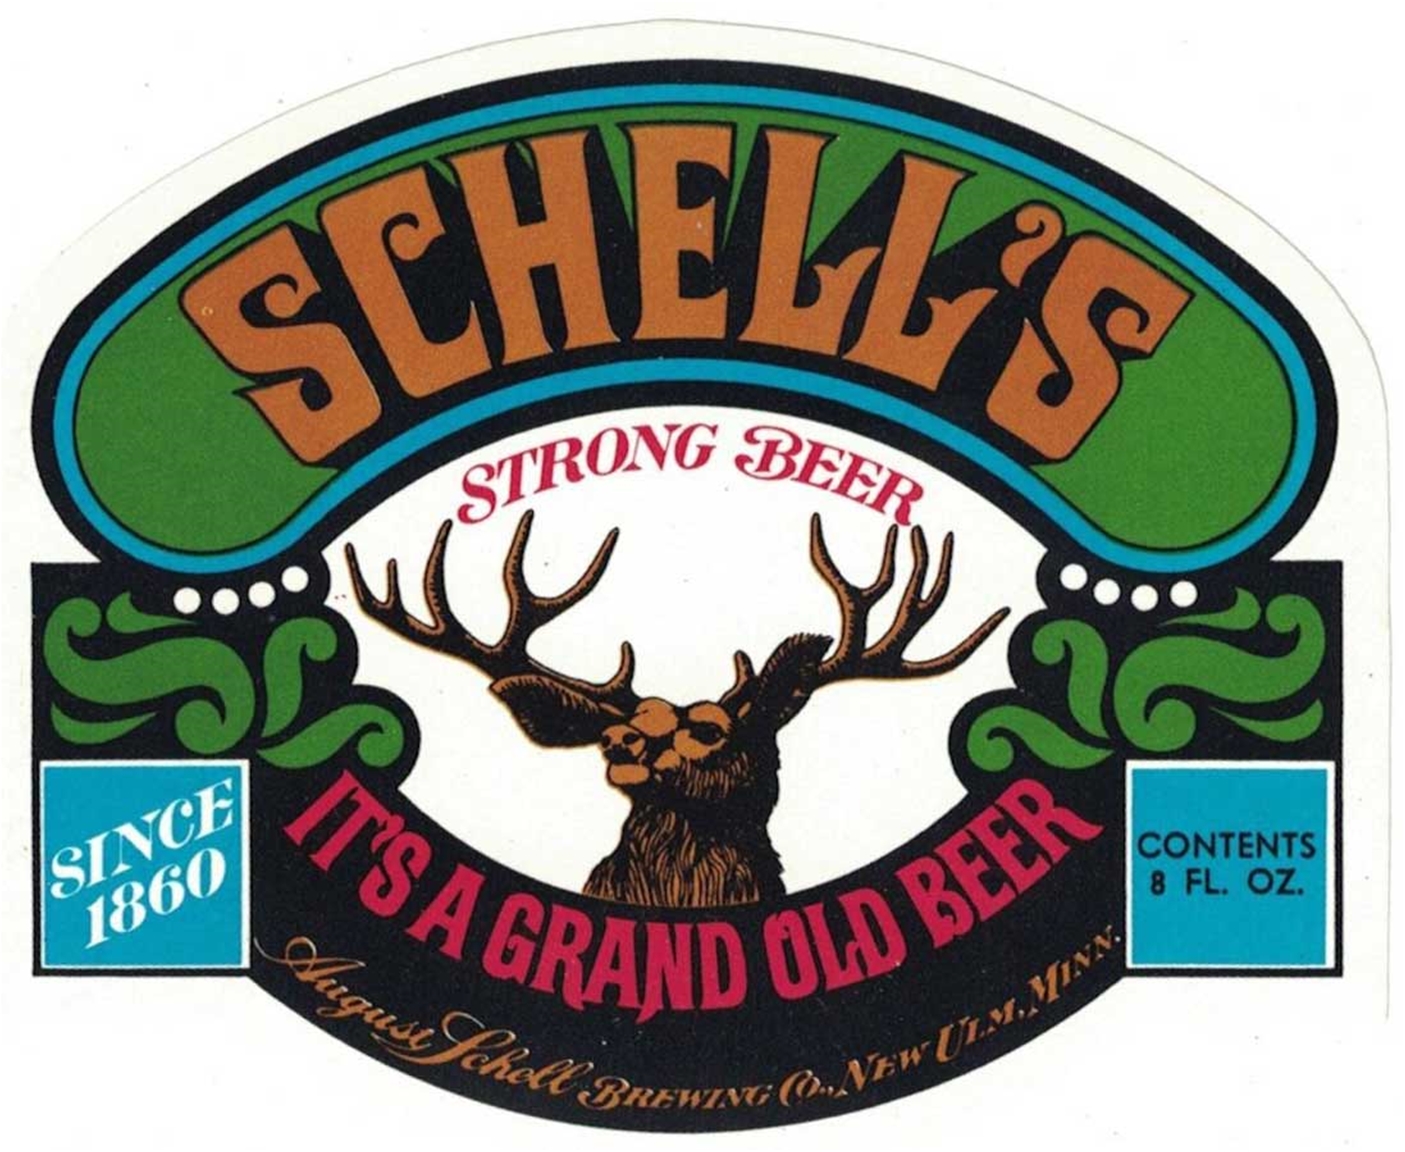 Schell's Strong Beer Label